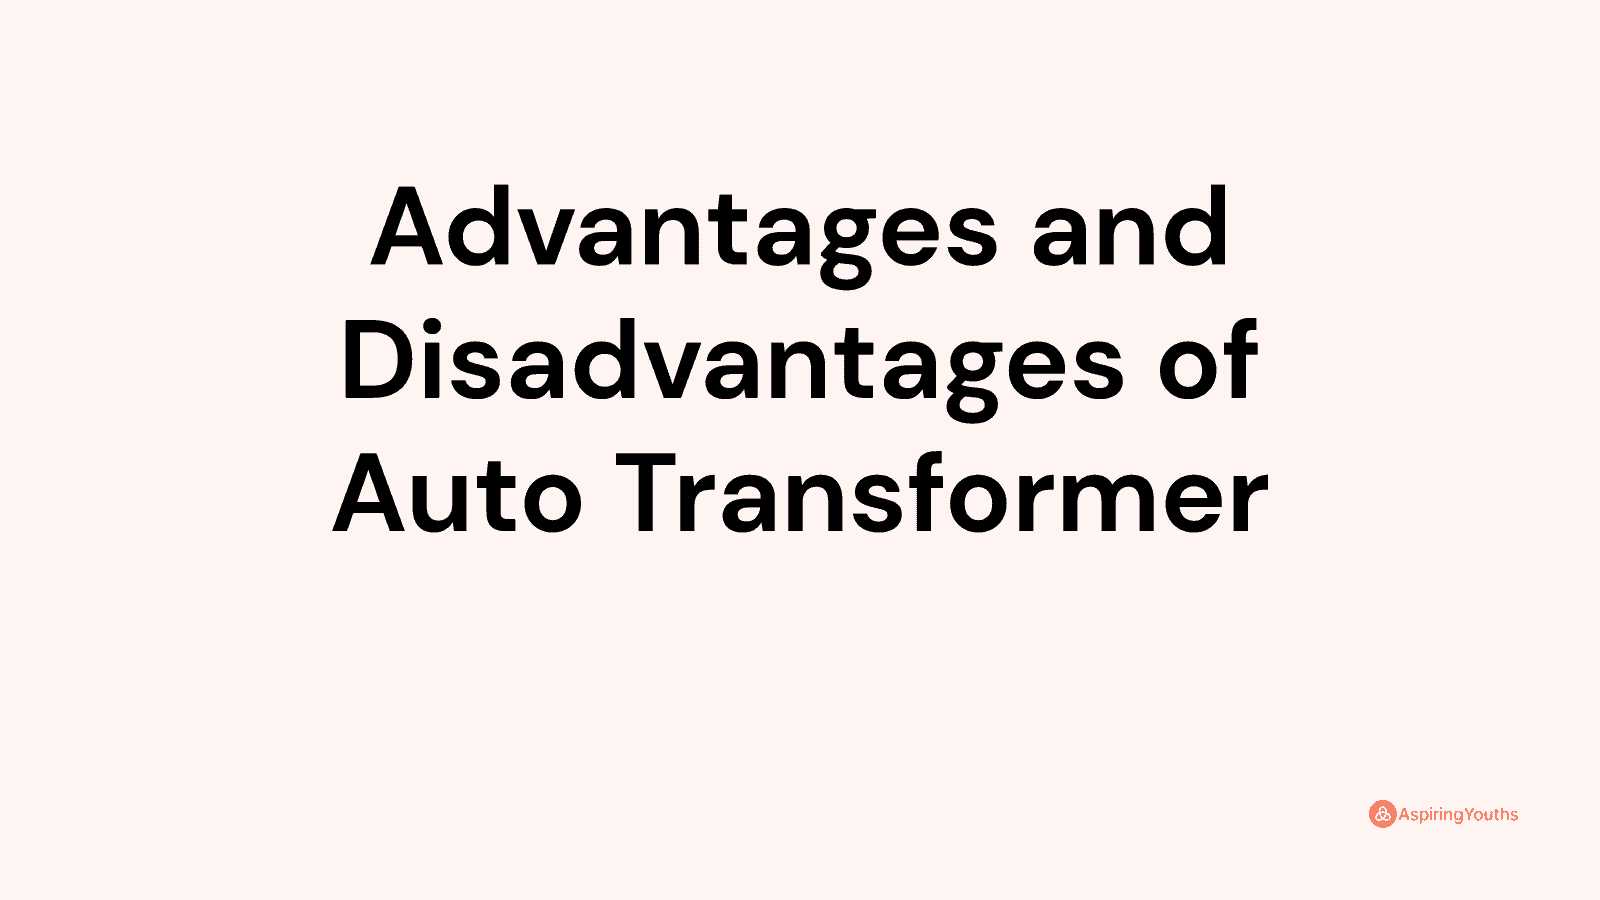 Advantages and disadvantages of Auto Transformer